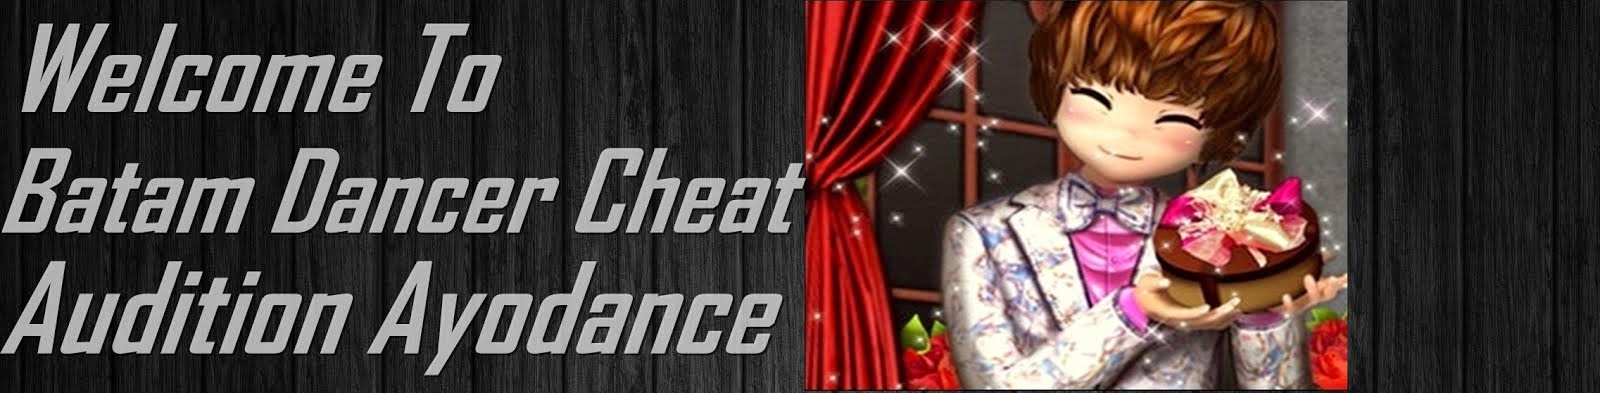 Batam Dancer Cheat